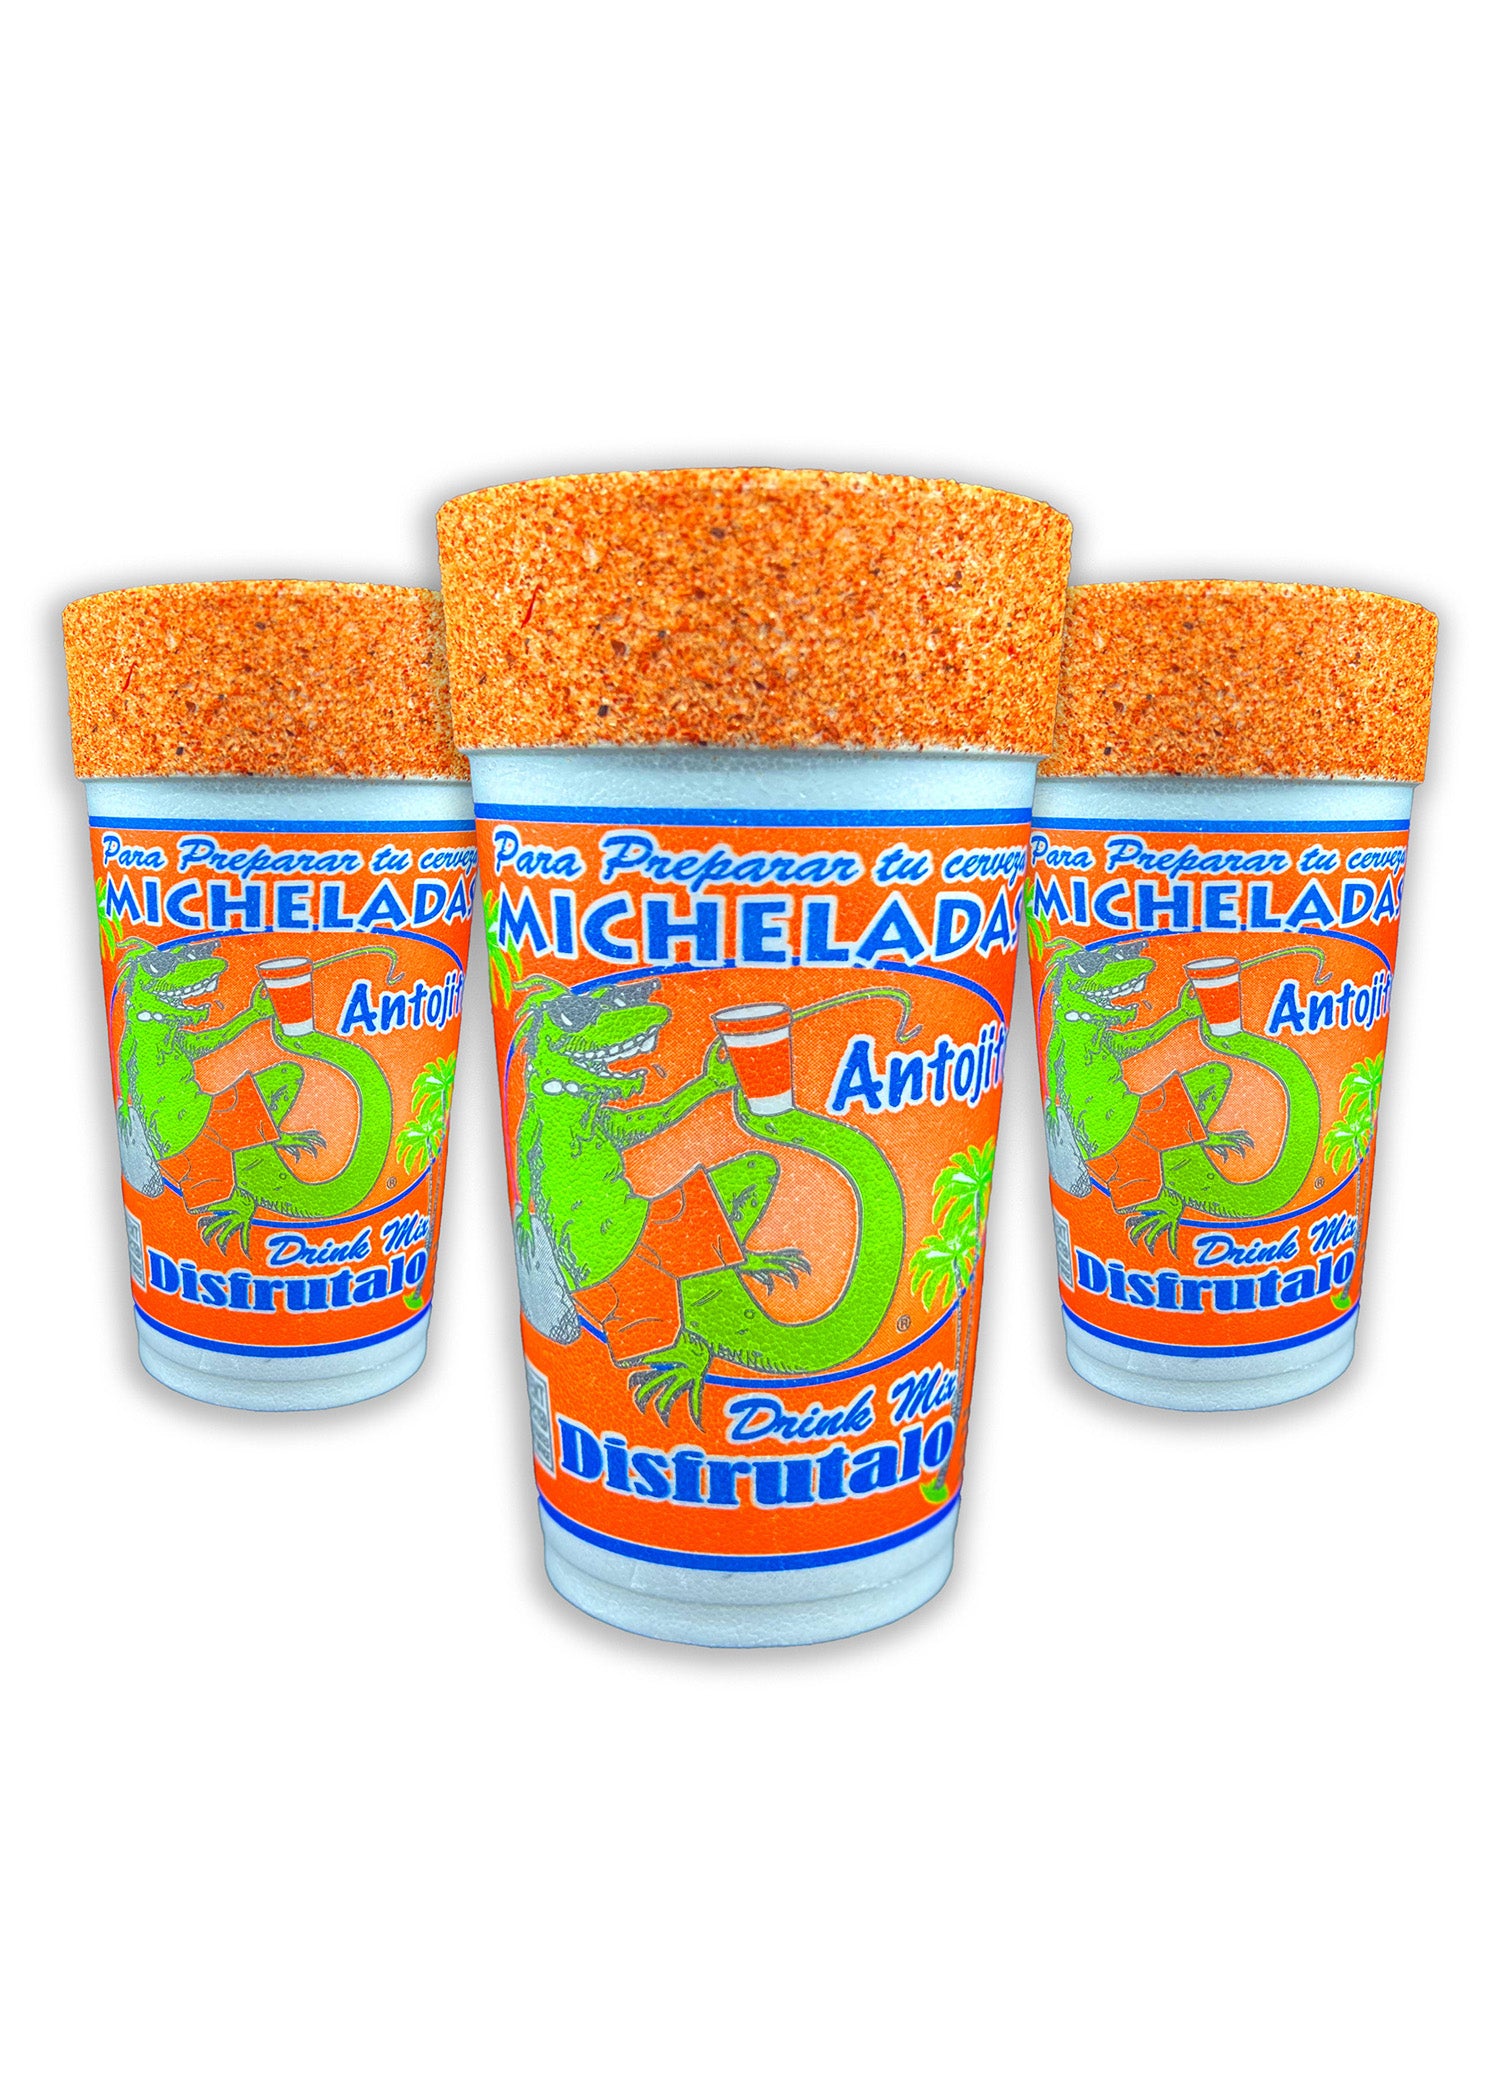 Original Michelada Cup - Antojitos (12 pack)